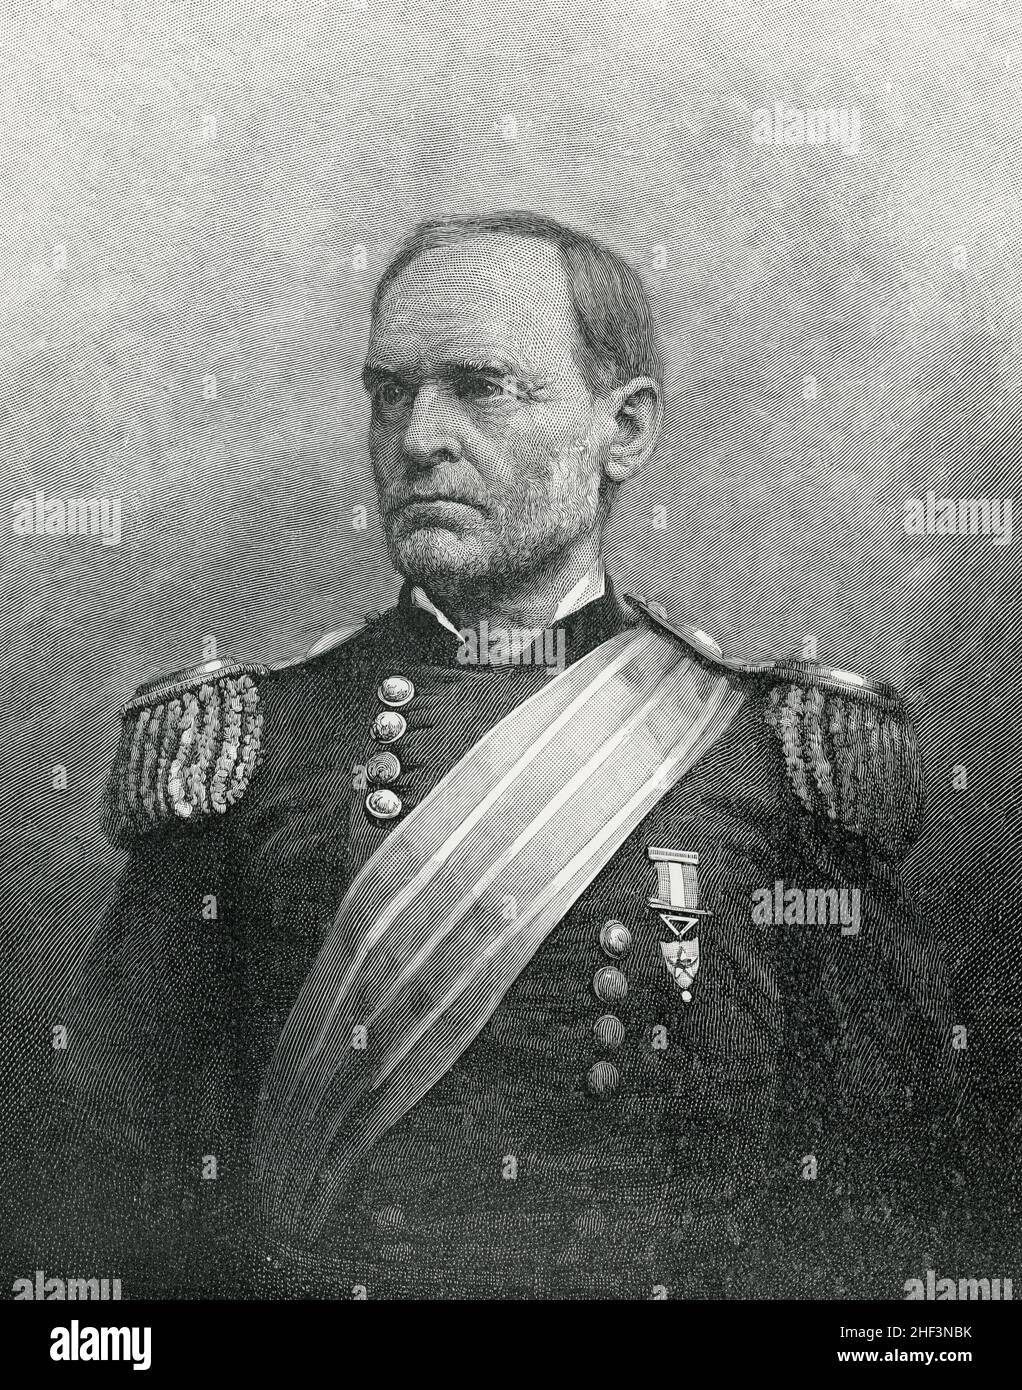 General William T Sherman during the American Civil War Stock Photo